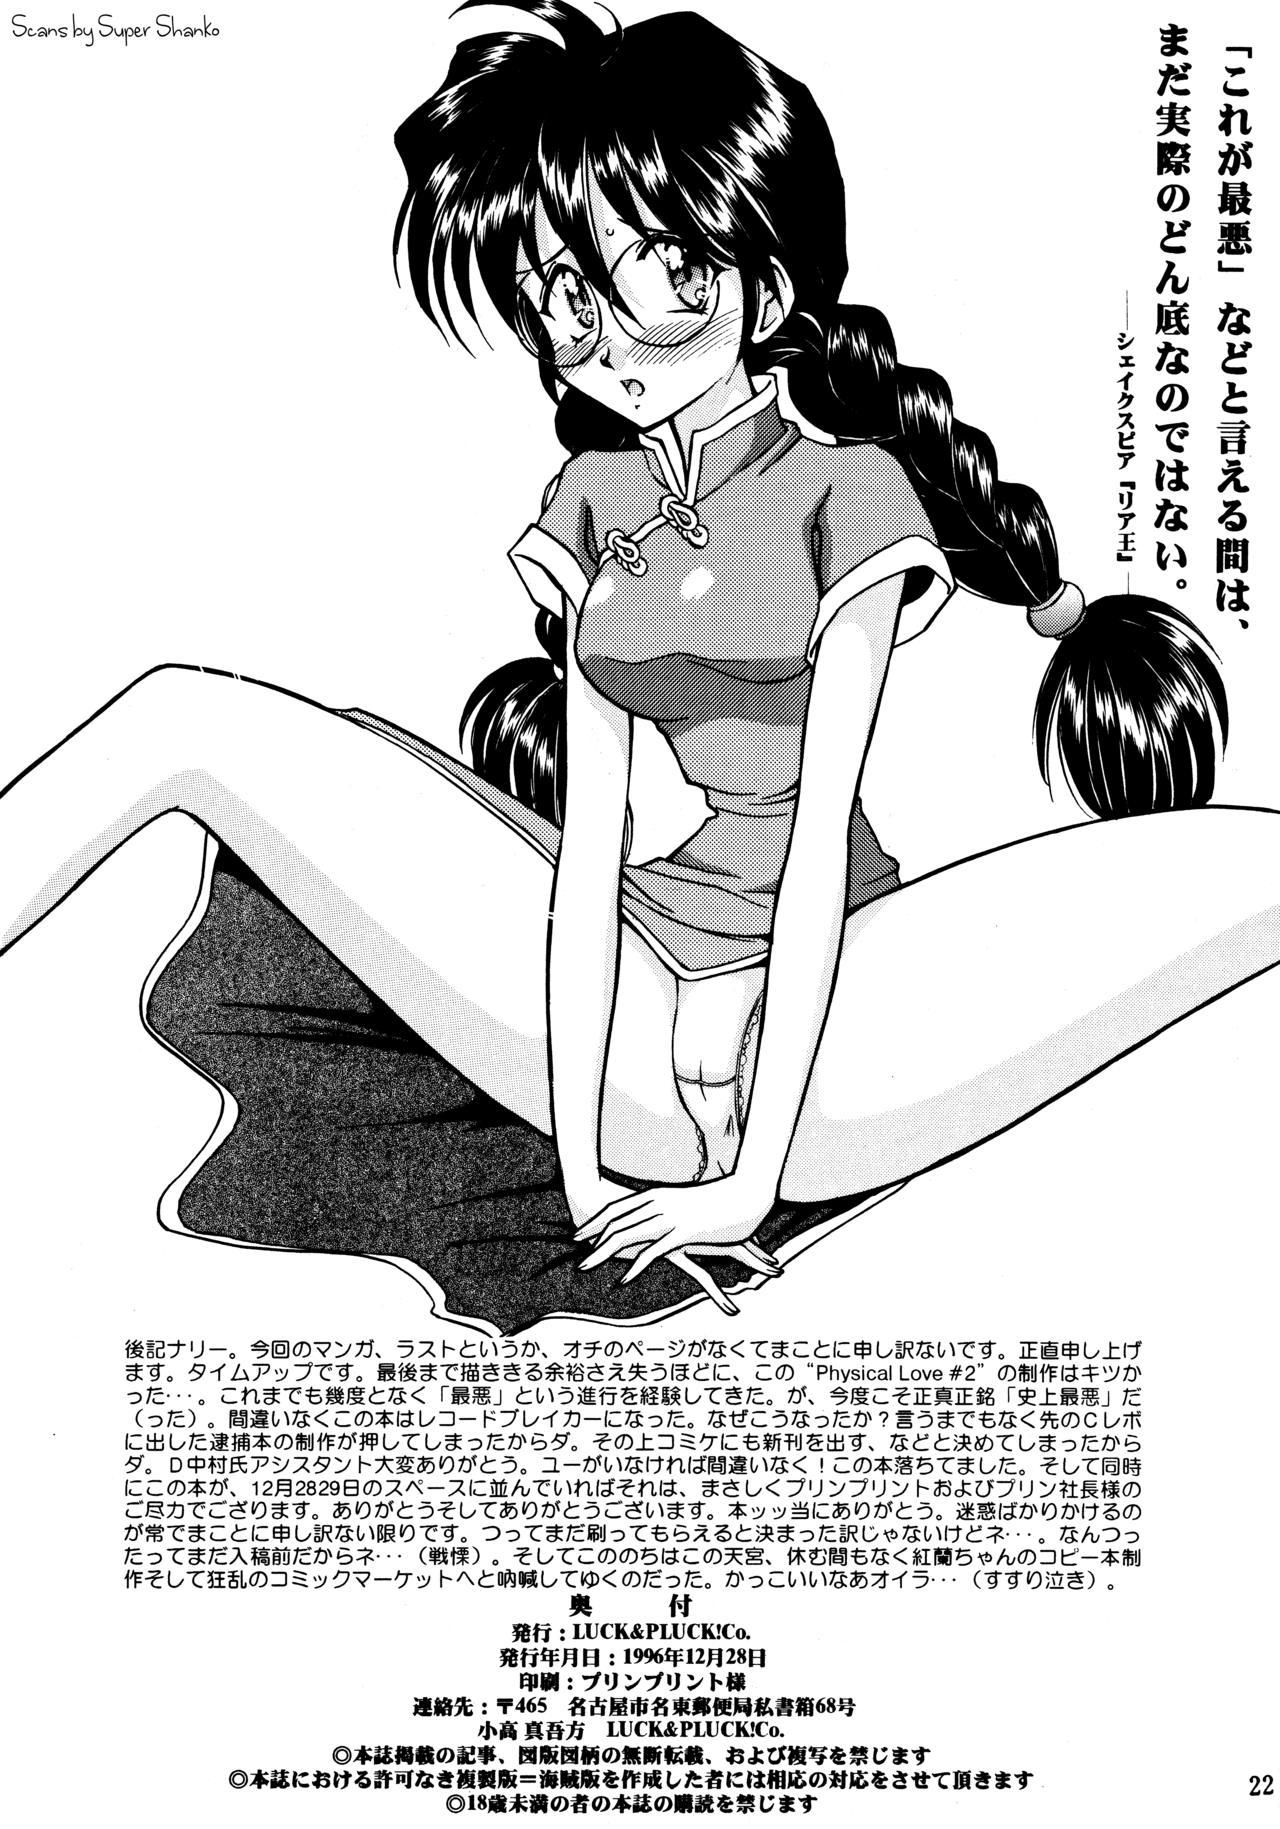 4some Physical Love #2 - Sakura taisen Trio - Page 21